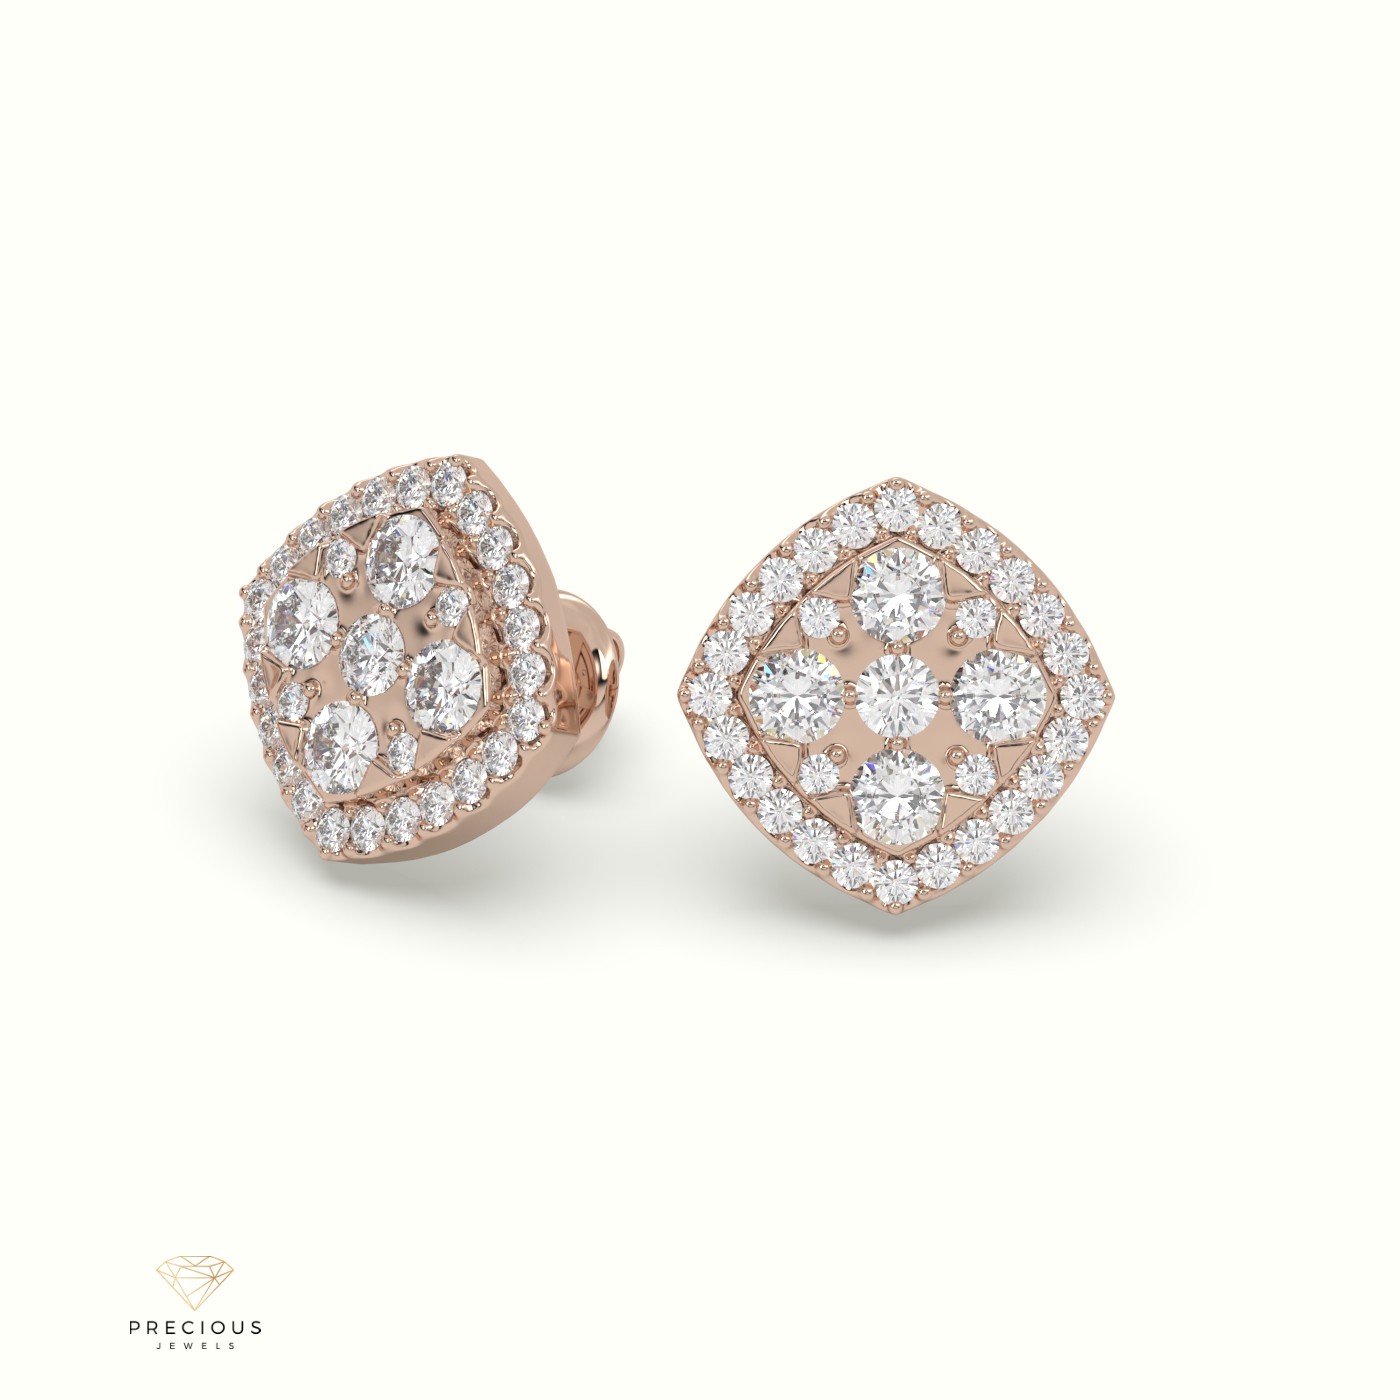 18k rose gold rounded square diamond cluster earrings